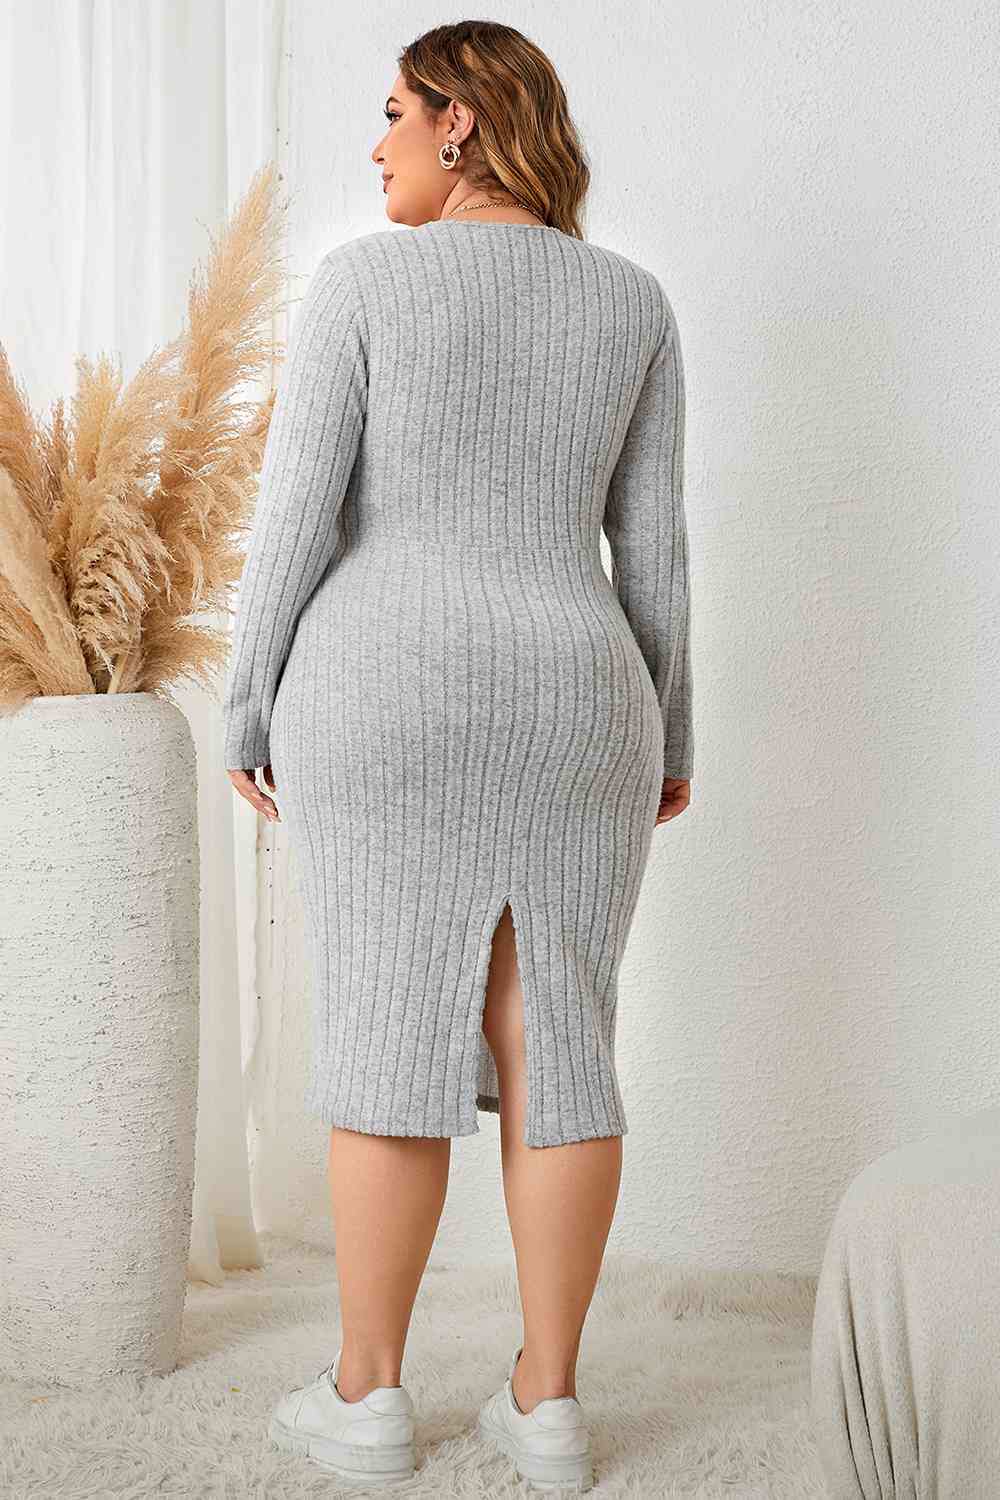 TEEK - Plus Size Heather Grey Neck Long Sleeve Slit Dress DRESS TEEK Trend   